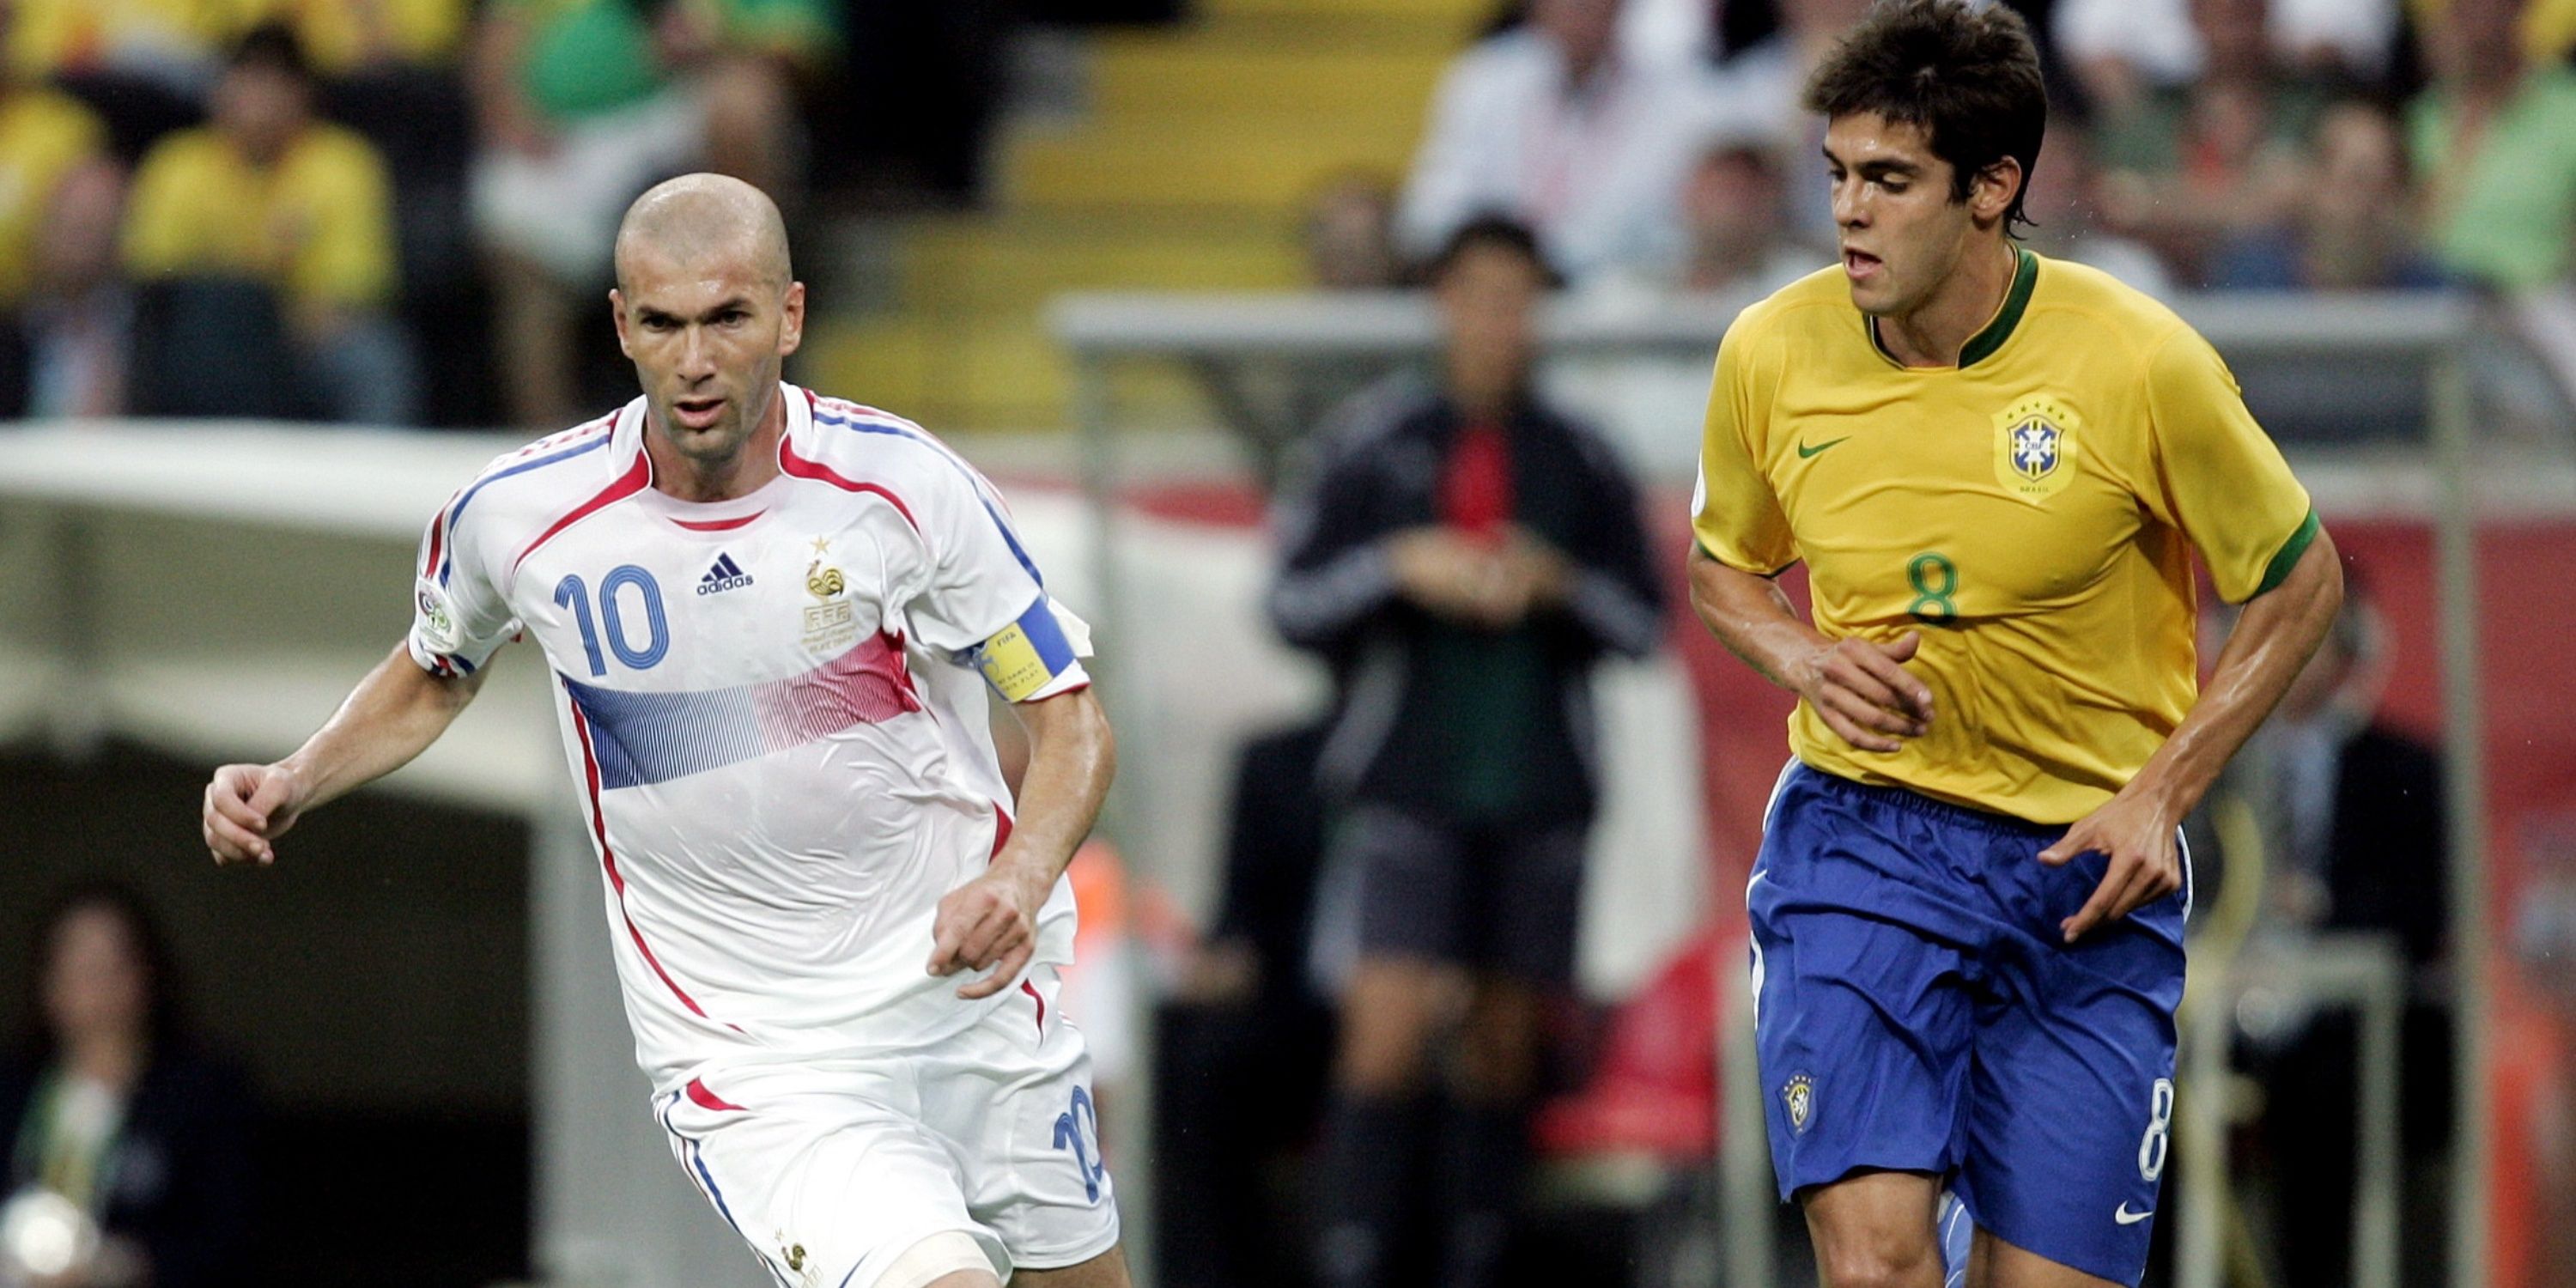 Zinedine Zidane was injured for masterclass in France vs Brazil at